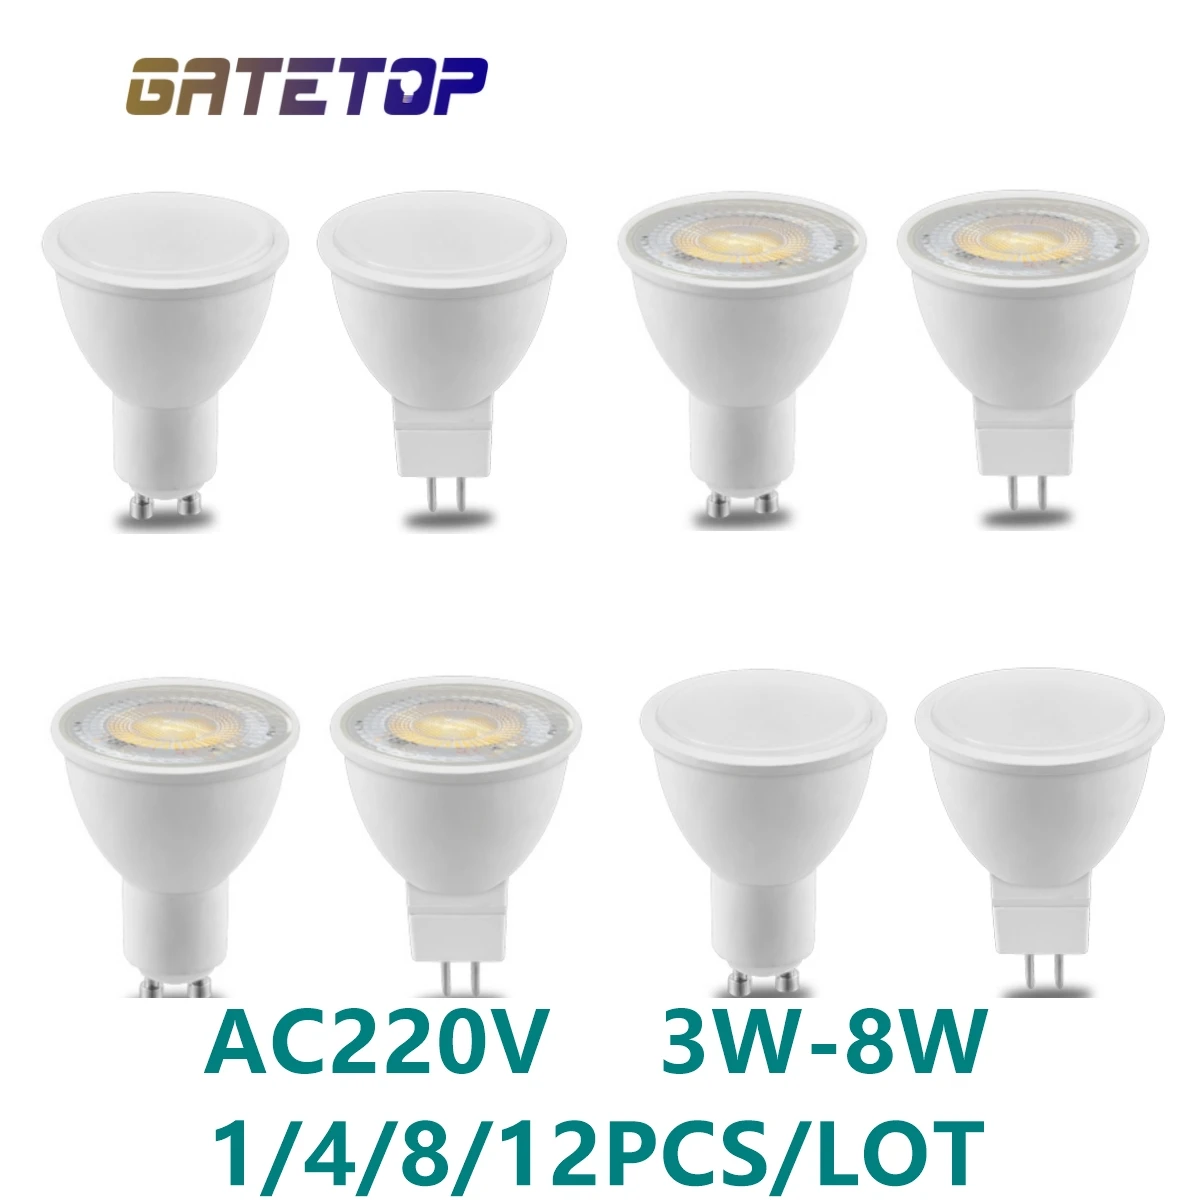 1-12pc LED spotlight GU10 MR16 GU5.3 AC220V Super bright warm white light replacement 50W 100W halogen lamp suitable for kitchen